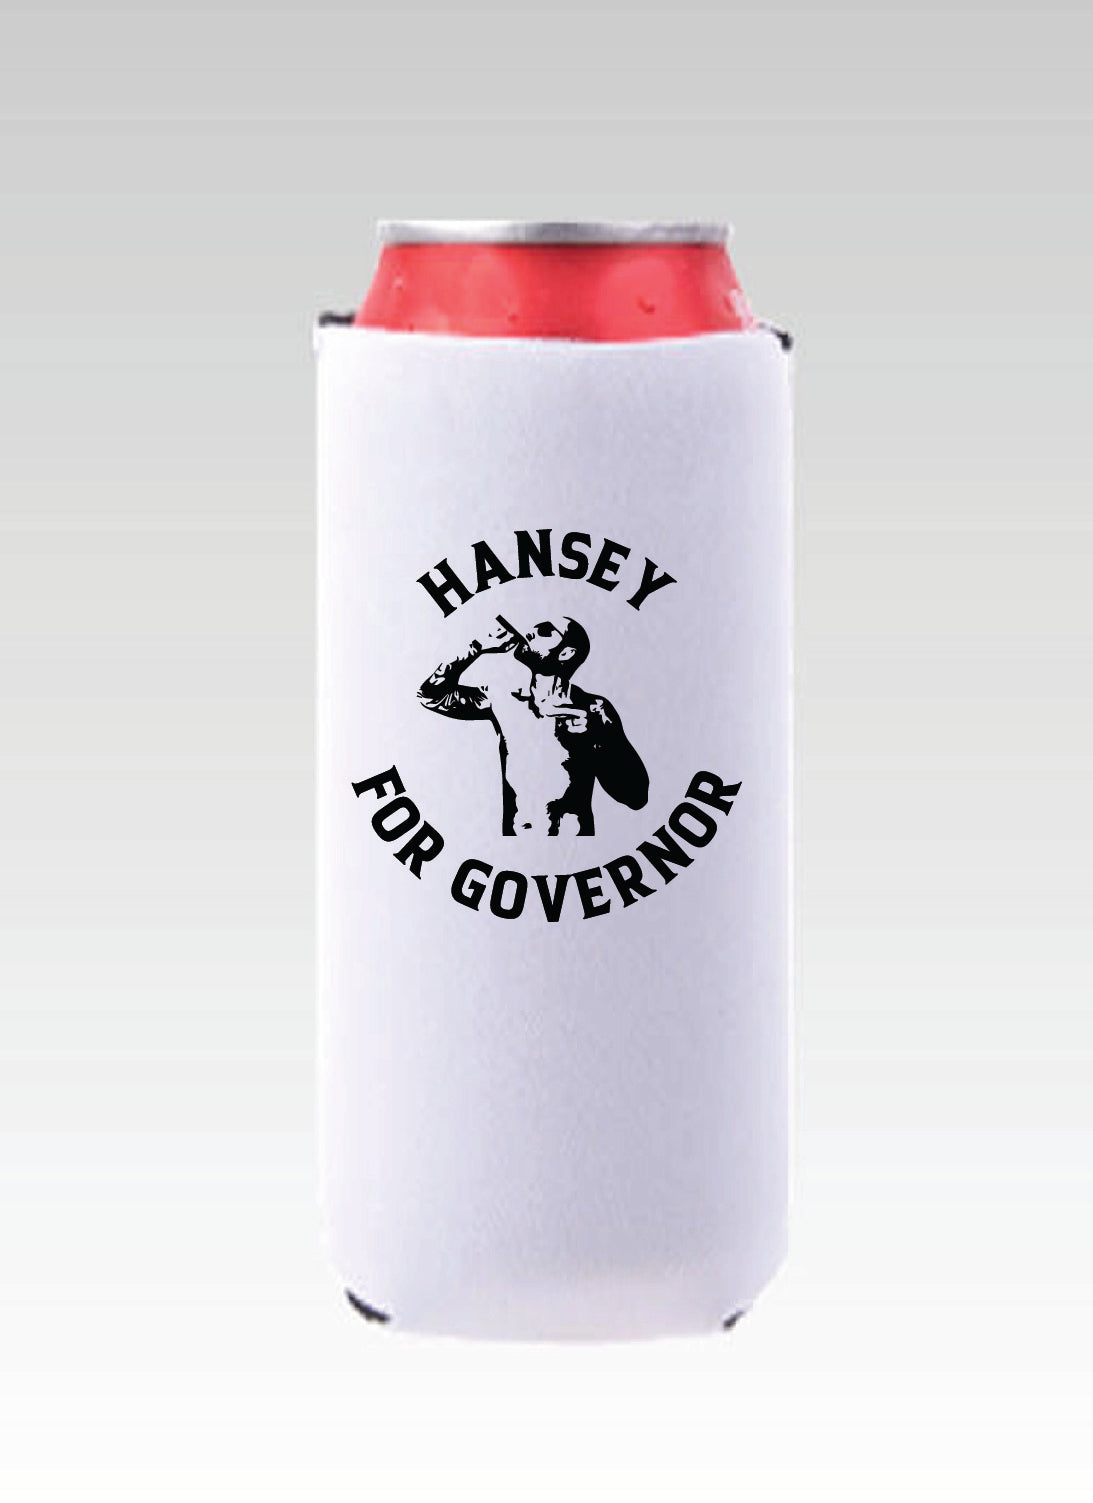 Hansey For Governor Slim Can Holder